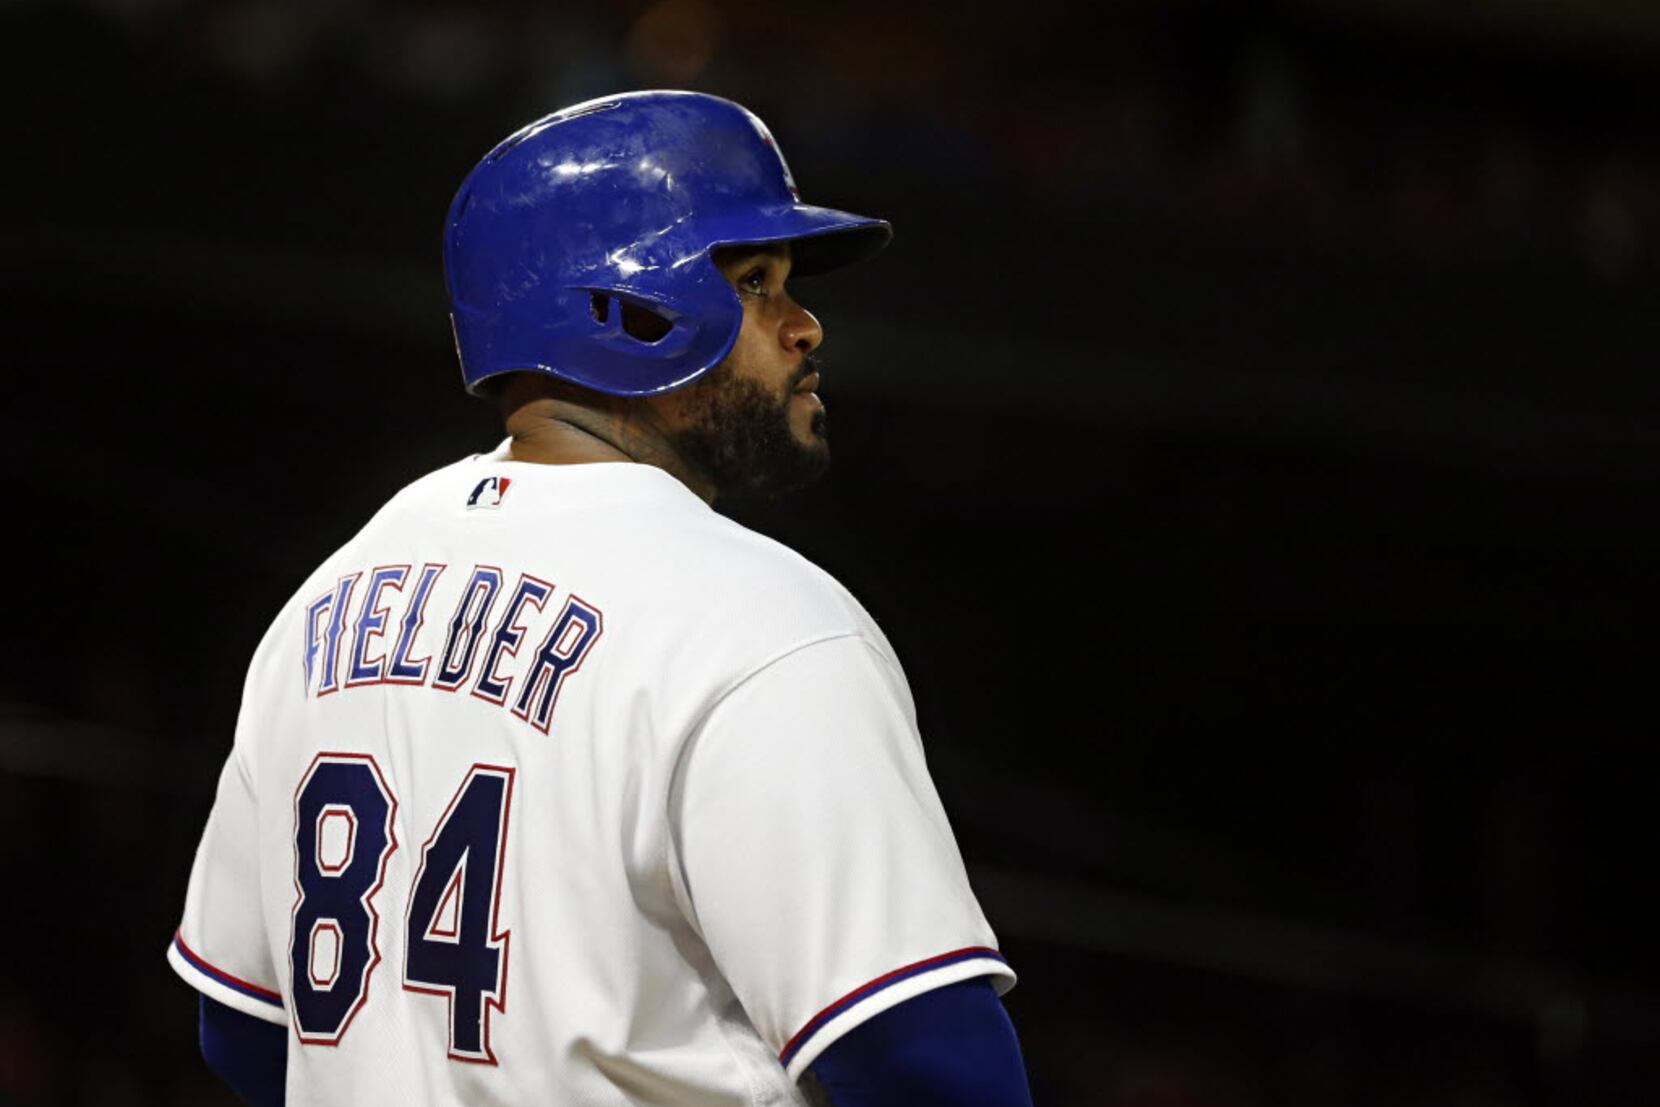 Prince Fielder will wear No. 84 next season with Texas